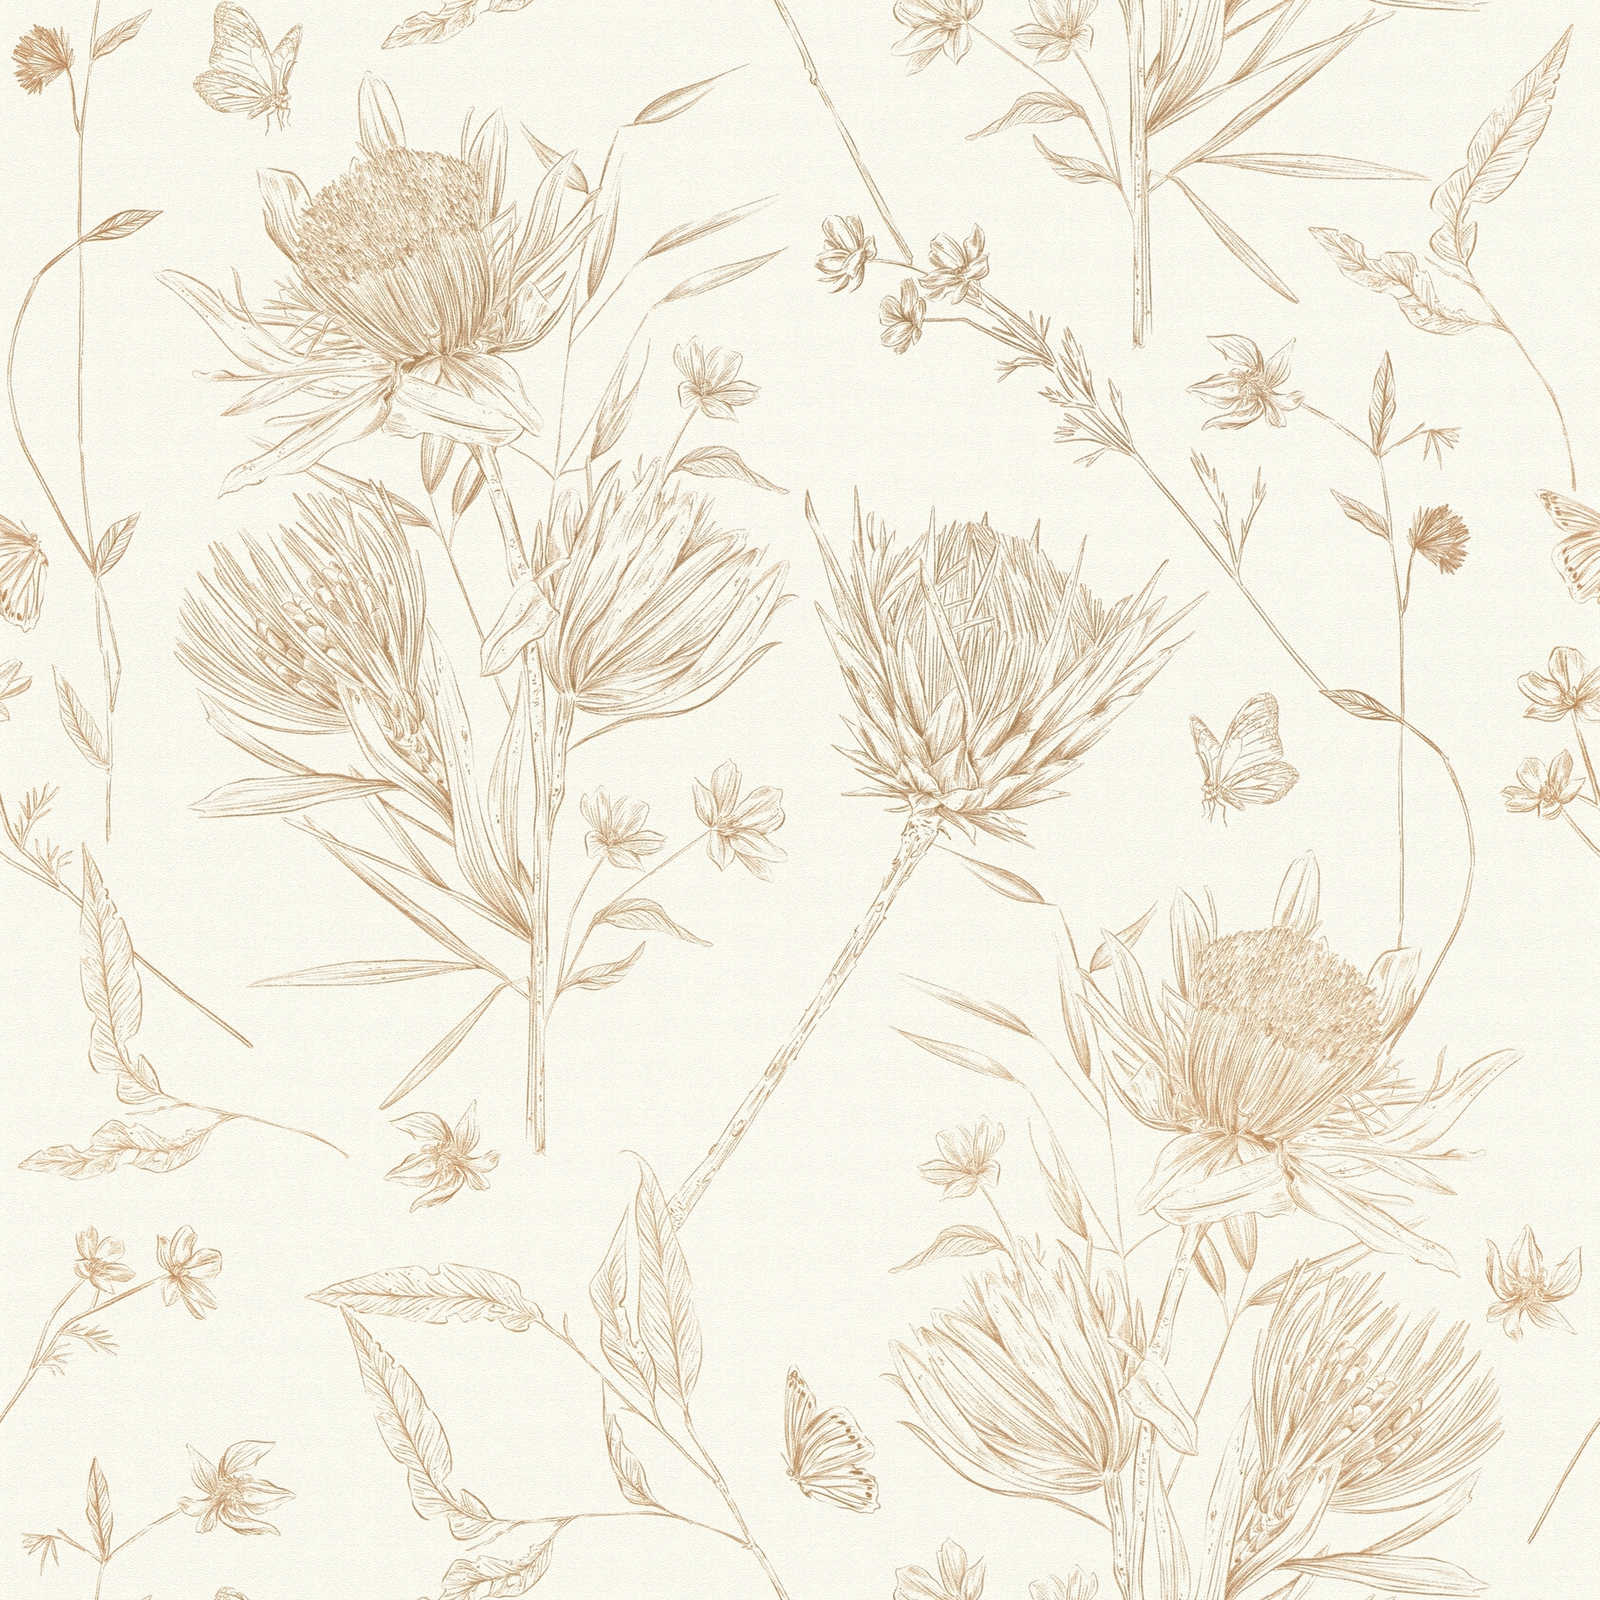 Floral wallpaper with flowers & butterflies textured matt - white, brown, beige
